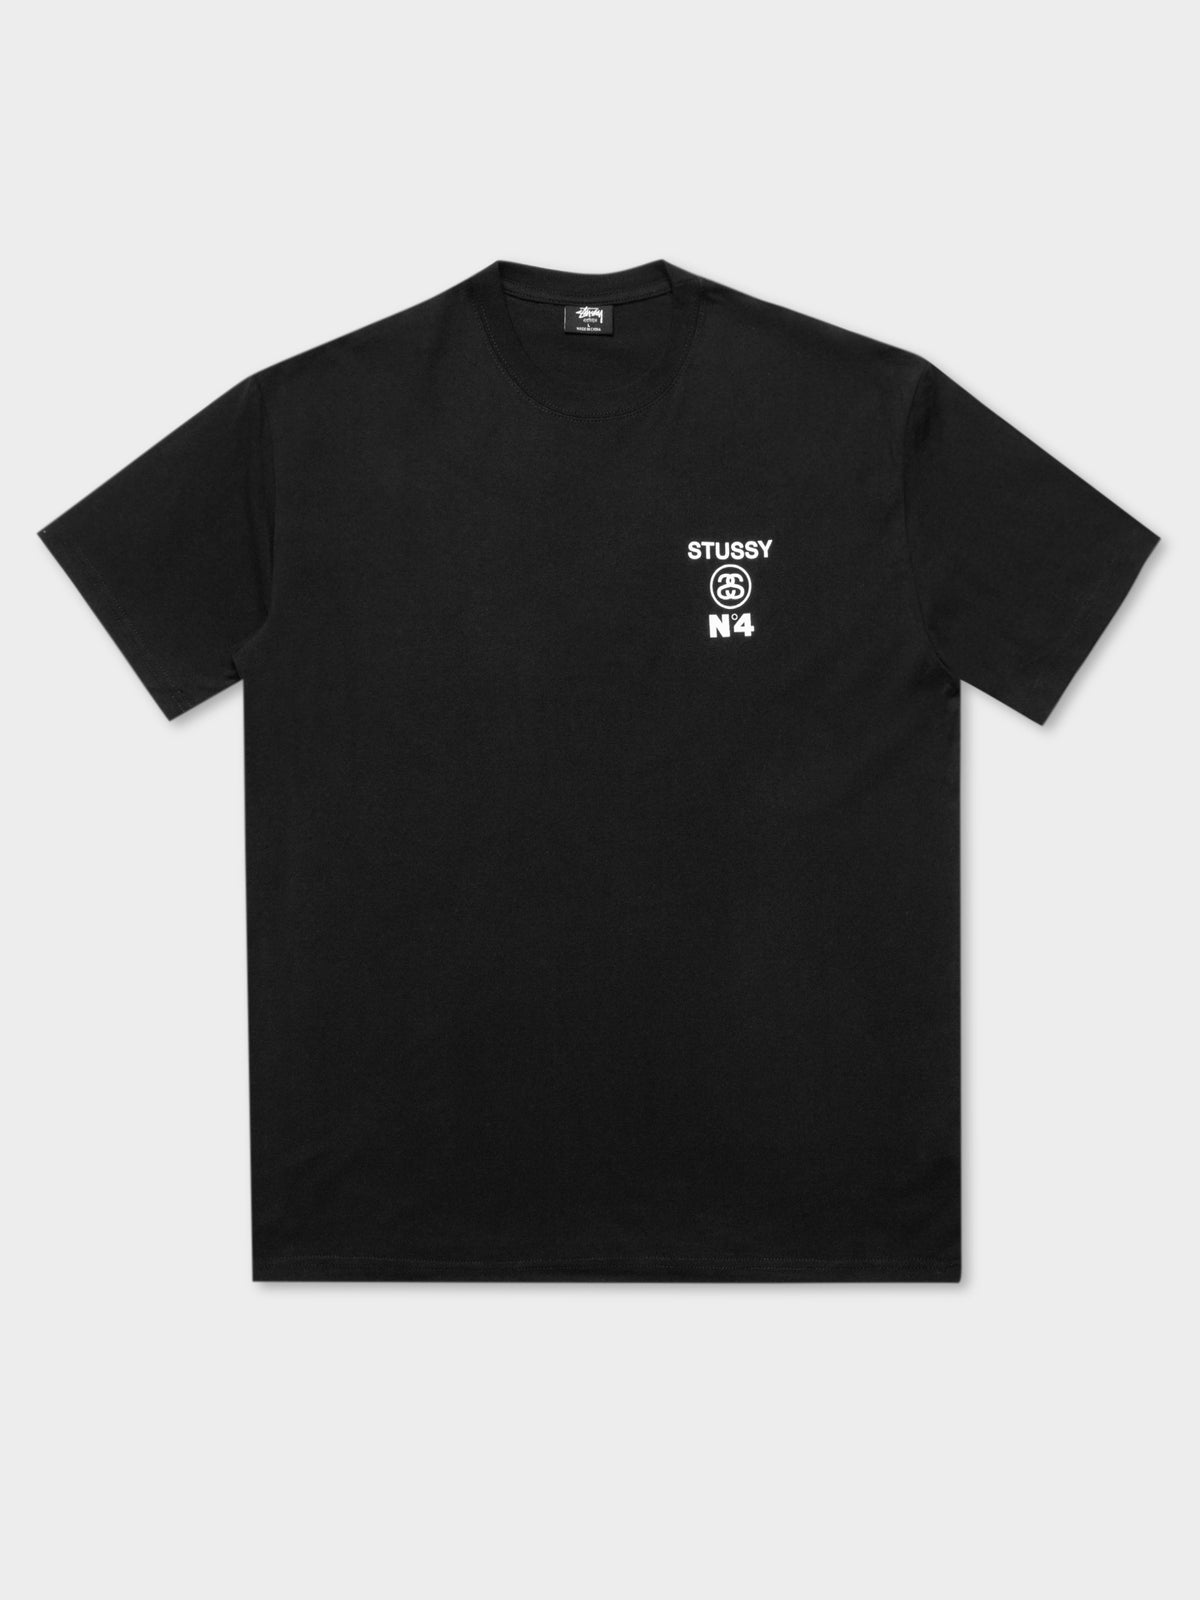 No.4 Short Sleeve T-Shirt in Black